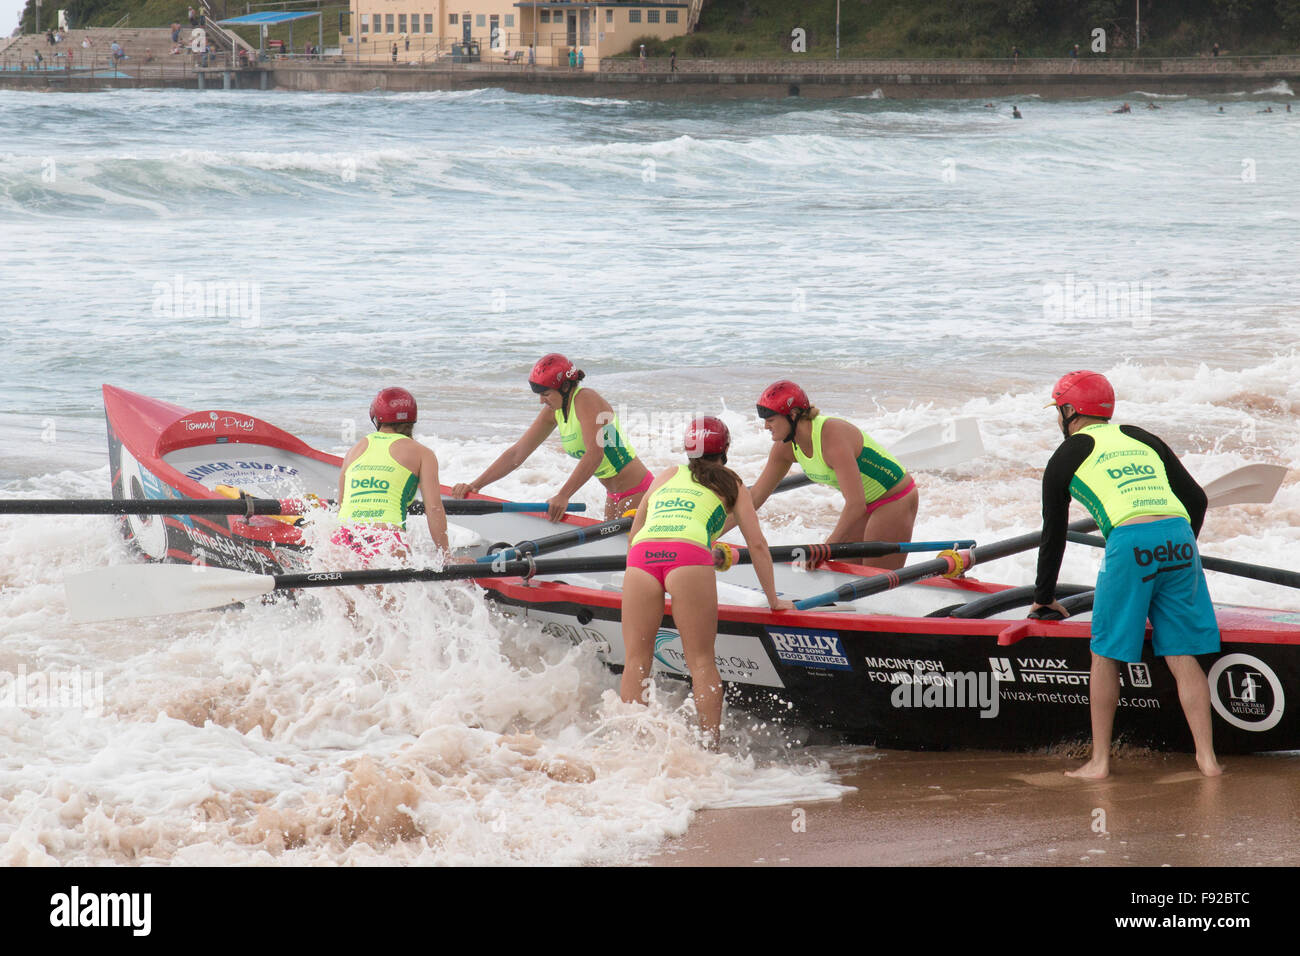 Ocean thunder surfboat racing carnival Dee why beach Sydney, womens girls teams competing,Sydney,australia Stock Photo